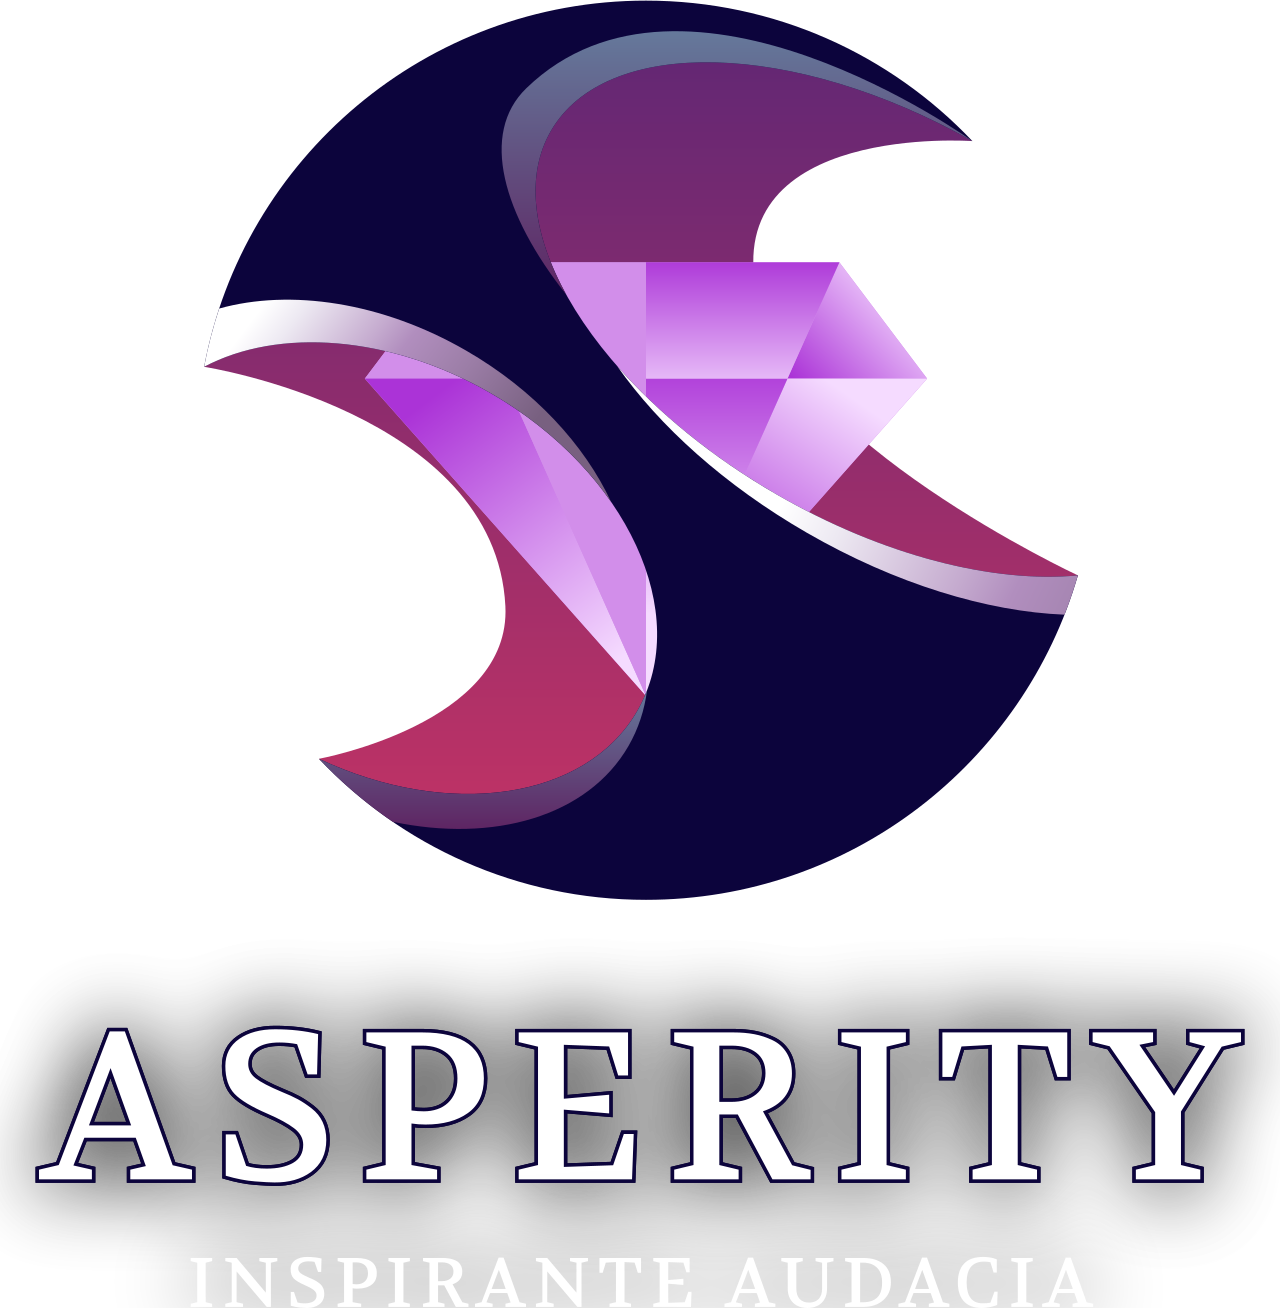 Asperity's web page